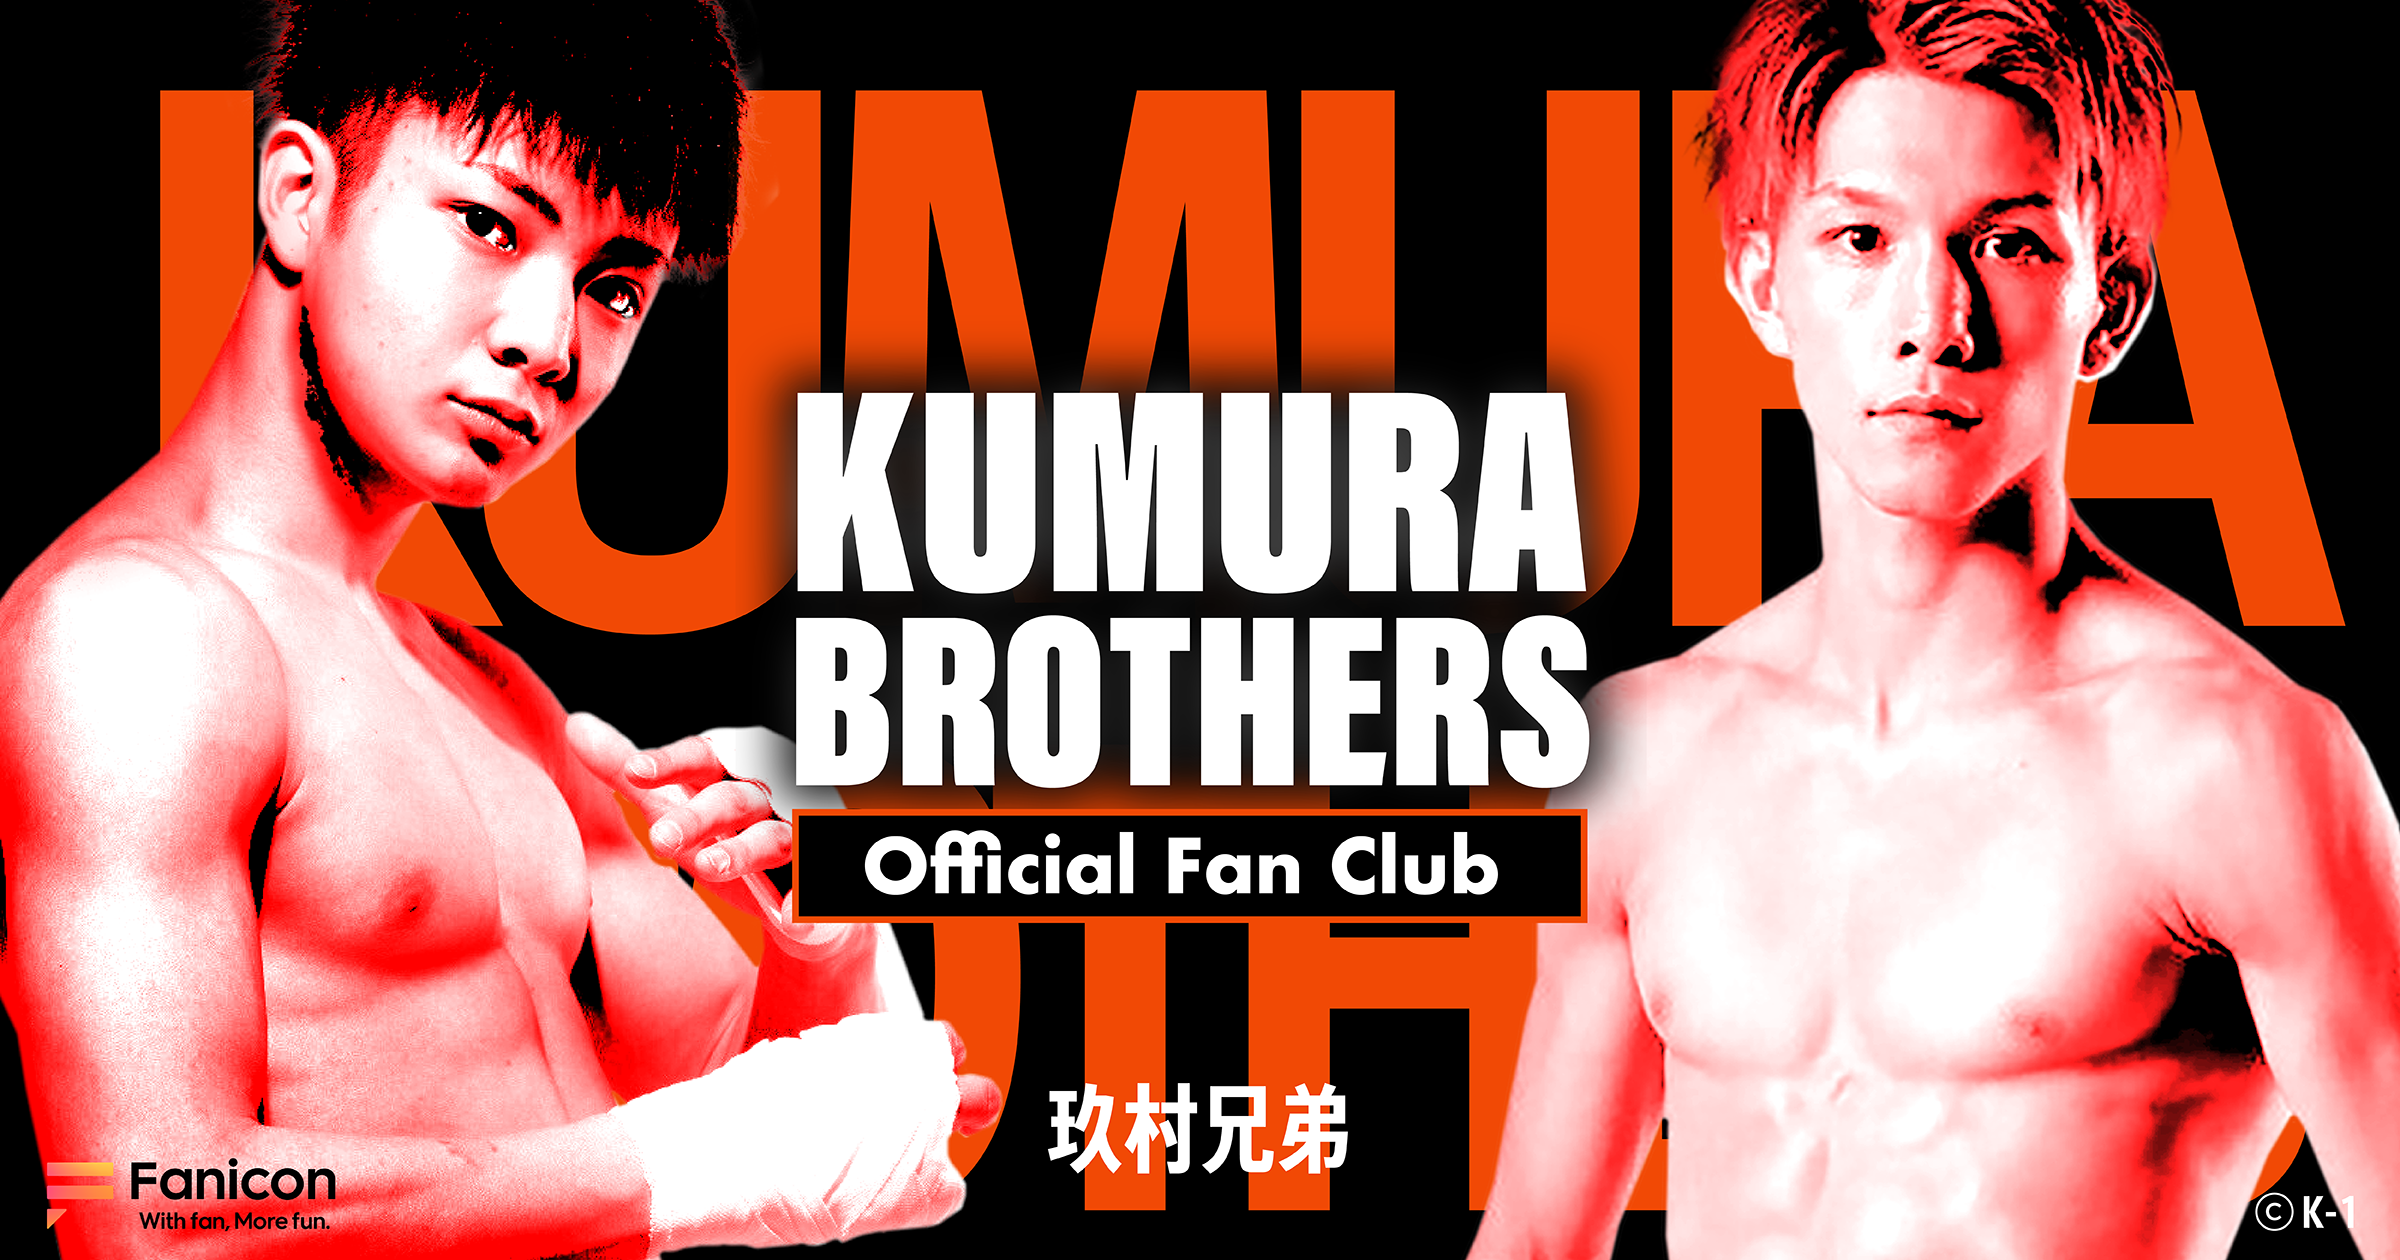 K-1の次世代を担う 実兄弟選手 玖村修平＆玖村将史 ”玖村兄弟”として「Fanicon(ファニコン)」で 公式ファンコミュニティ【Kumura brothers Official Fan Club】オープン